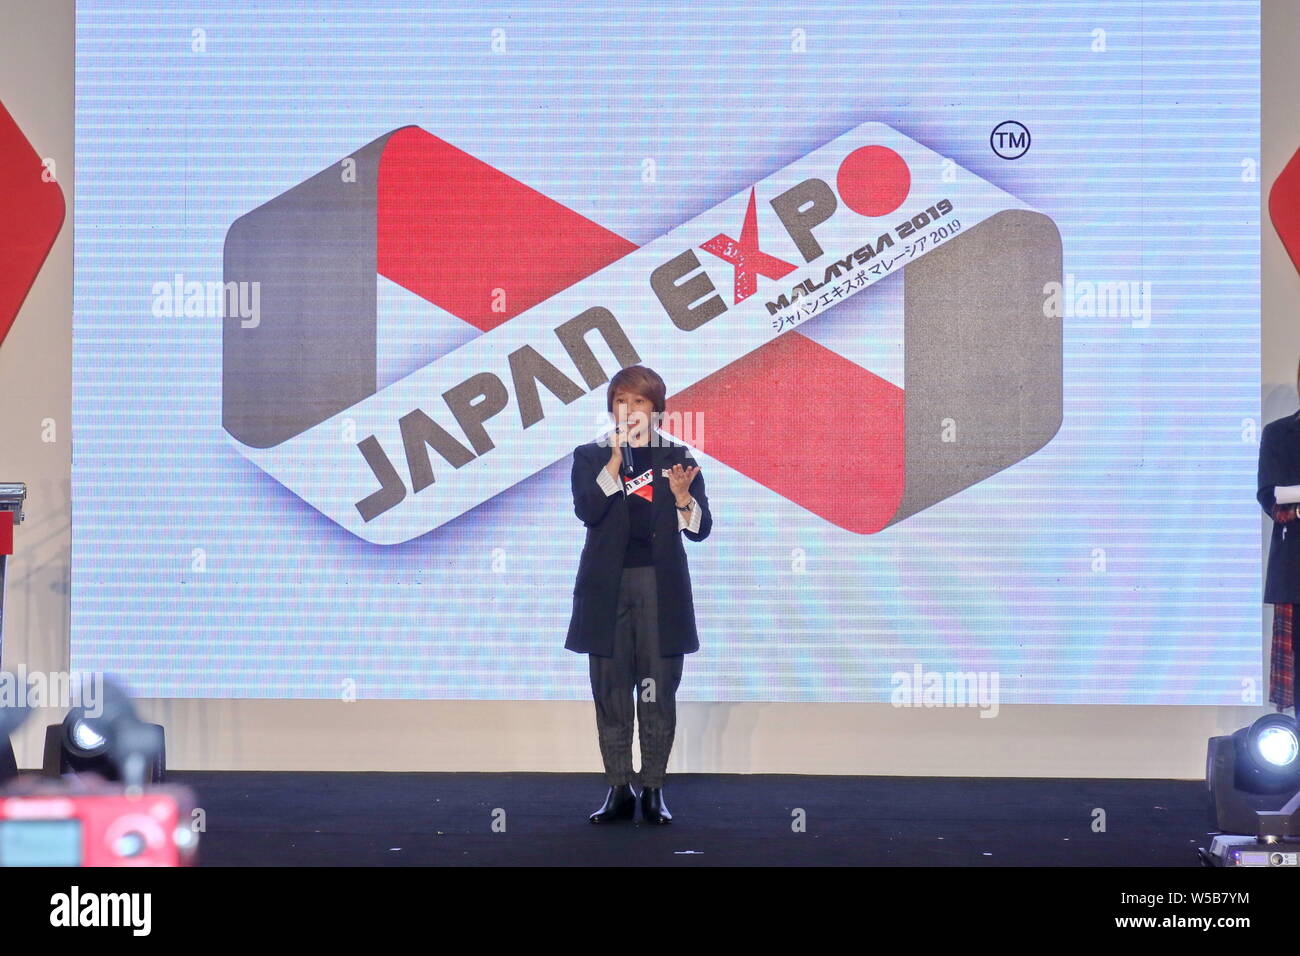 japan expo malaysia 2019